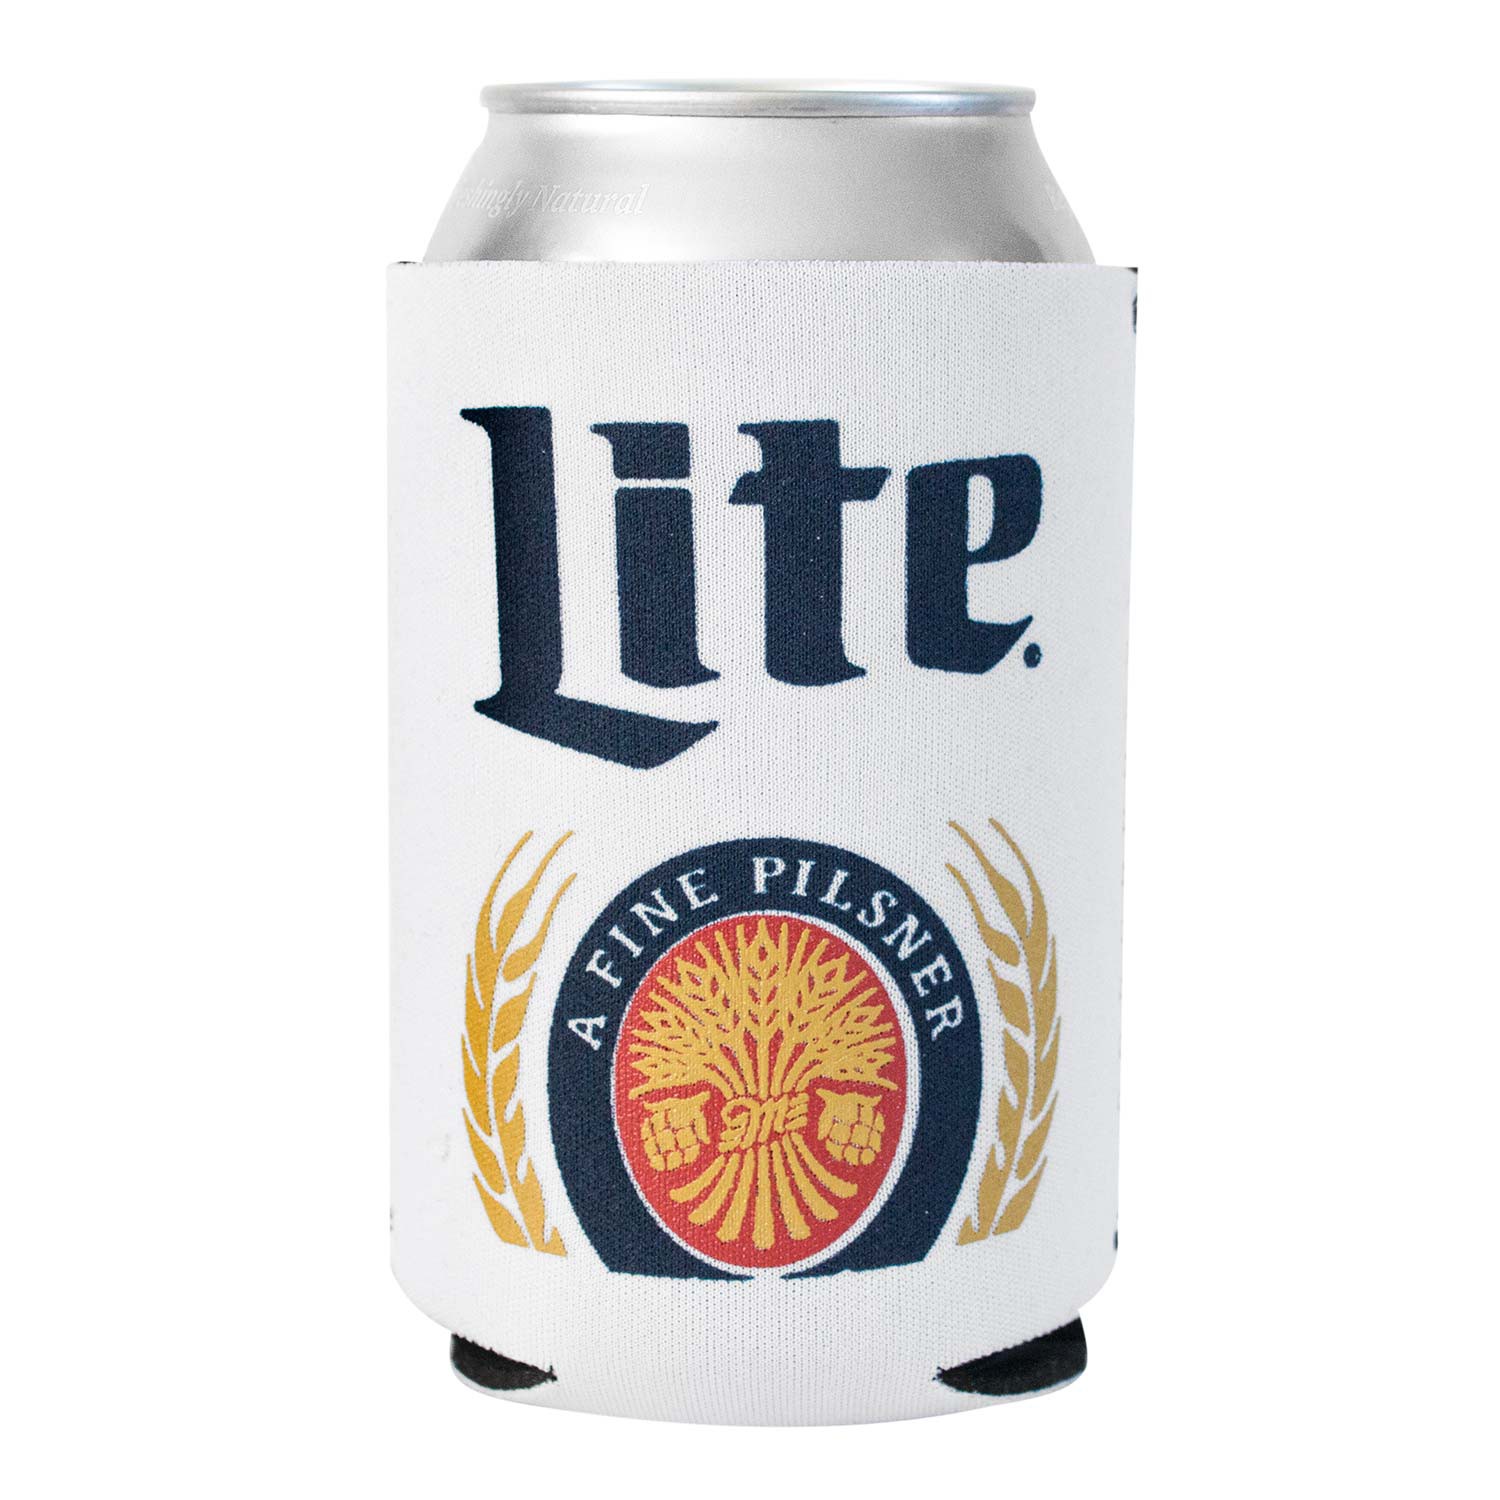 10 New Miller Lite Beer Logo Lanyard lot of 